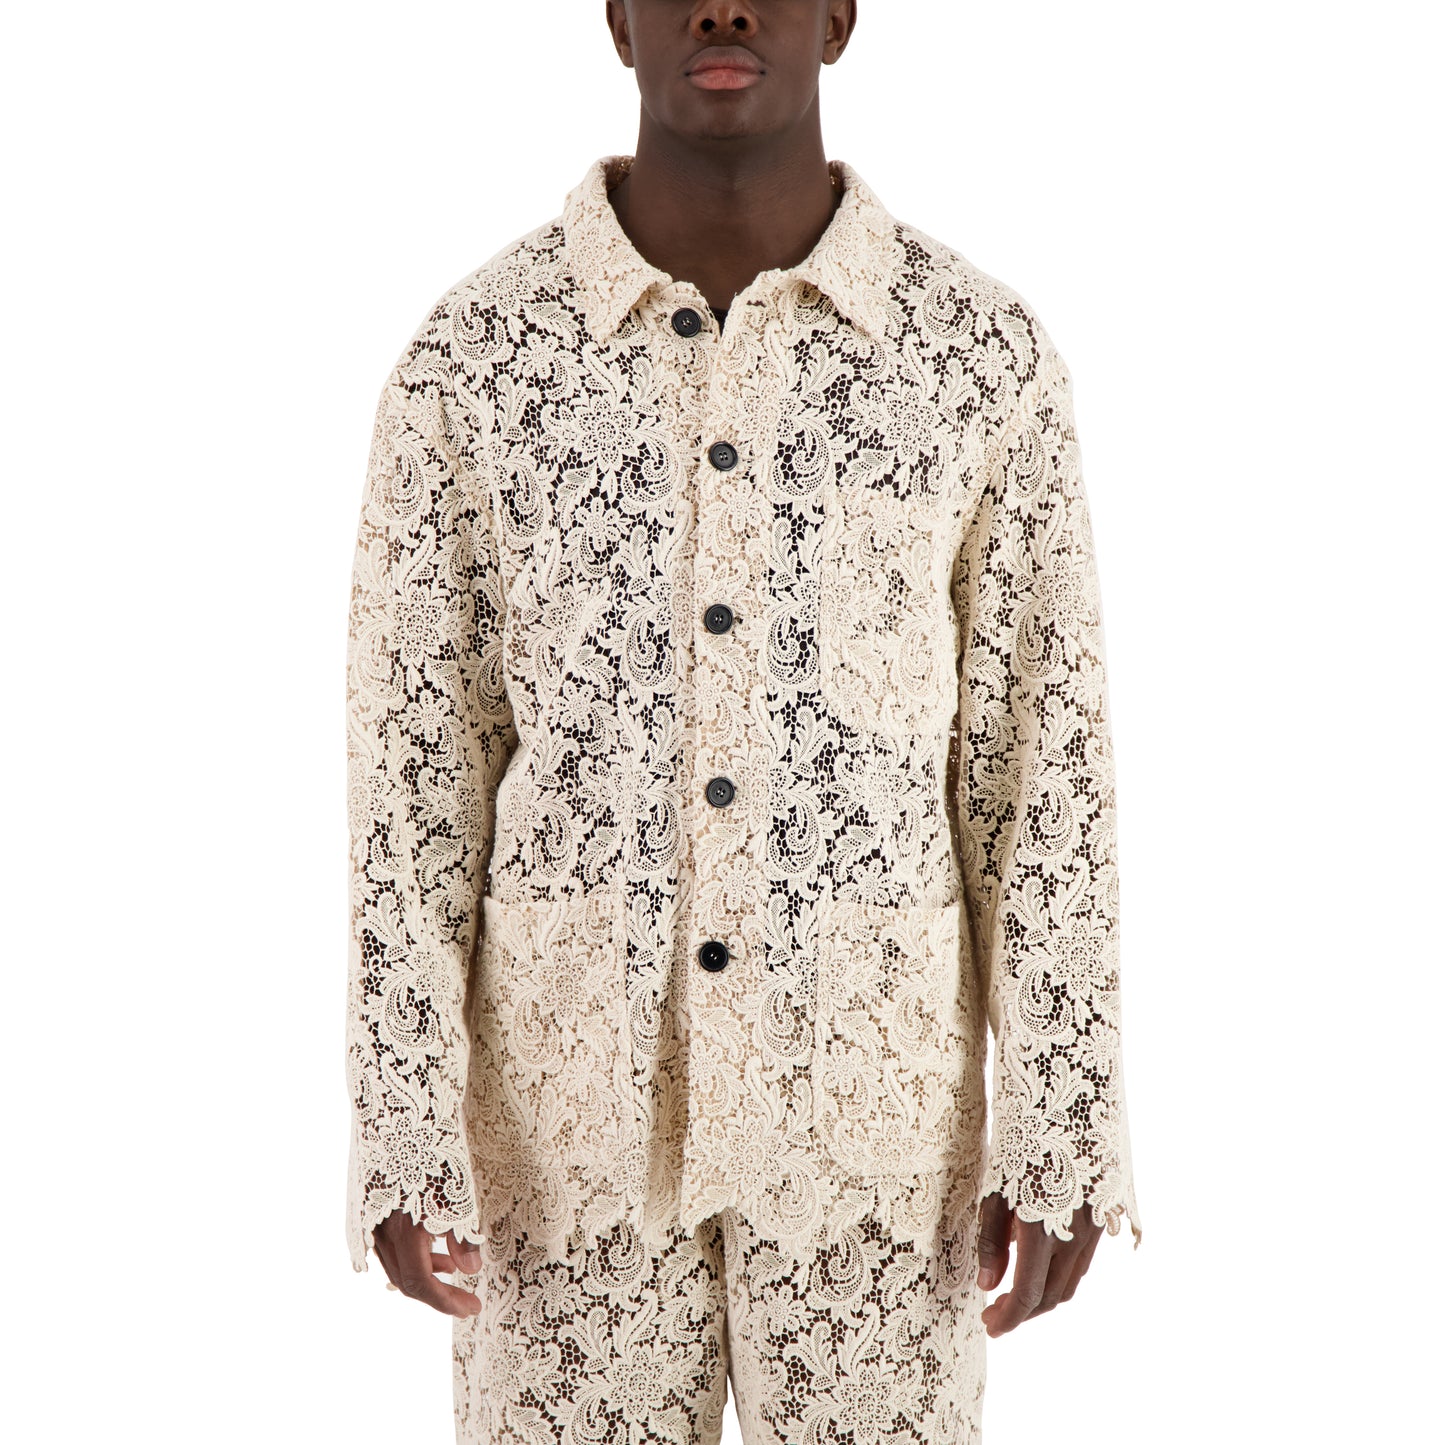 Bill Unlined Organic Cotton Lace Workwear Jacket Natural White